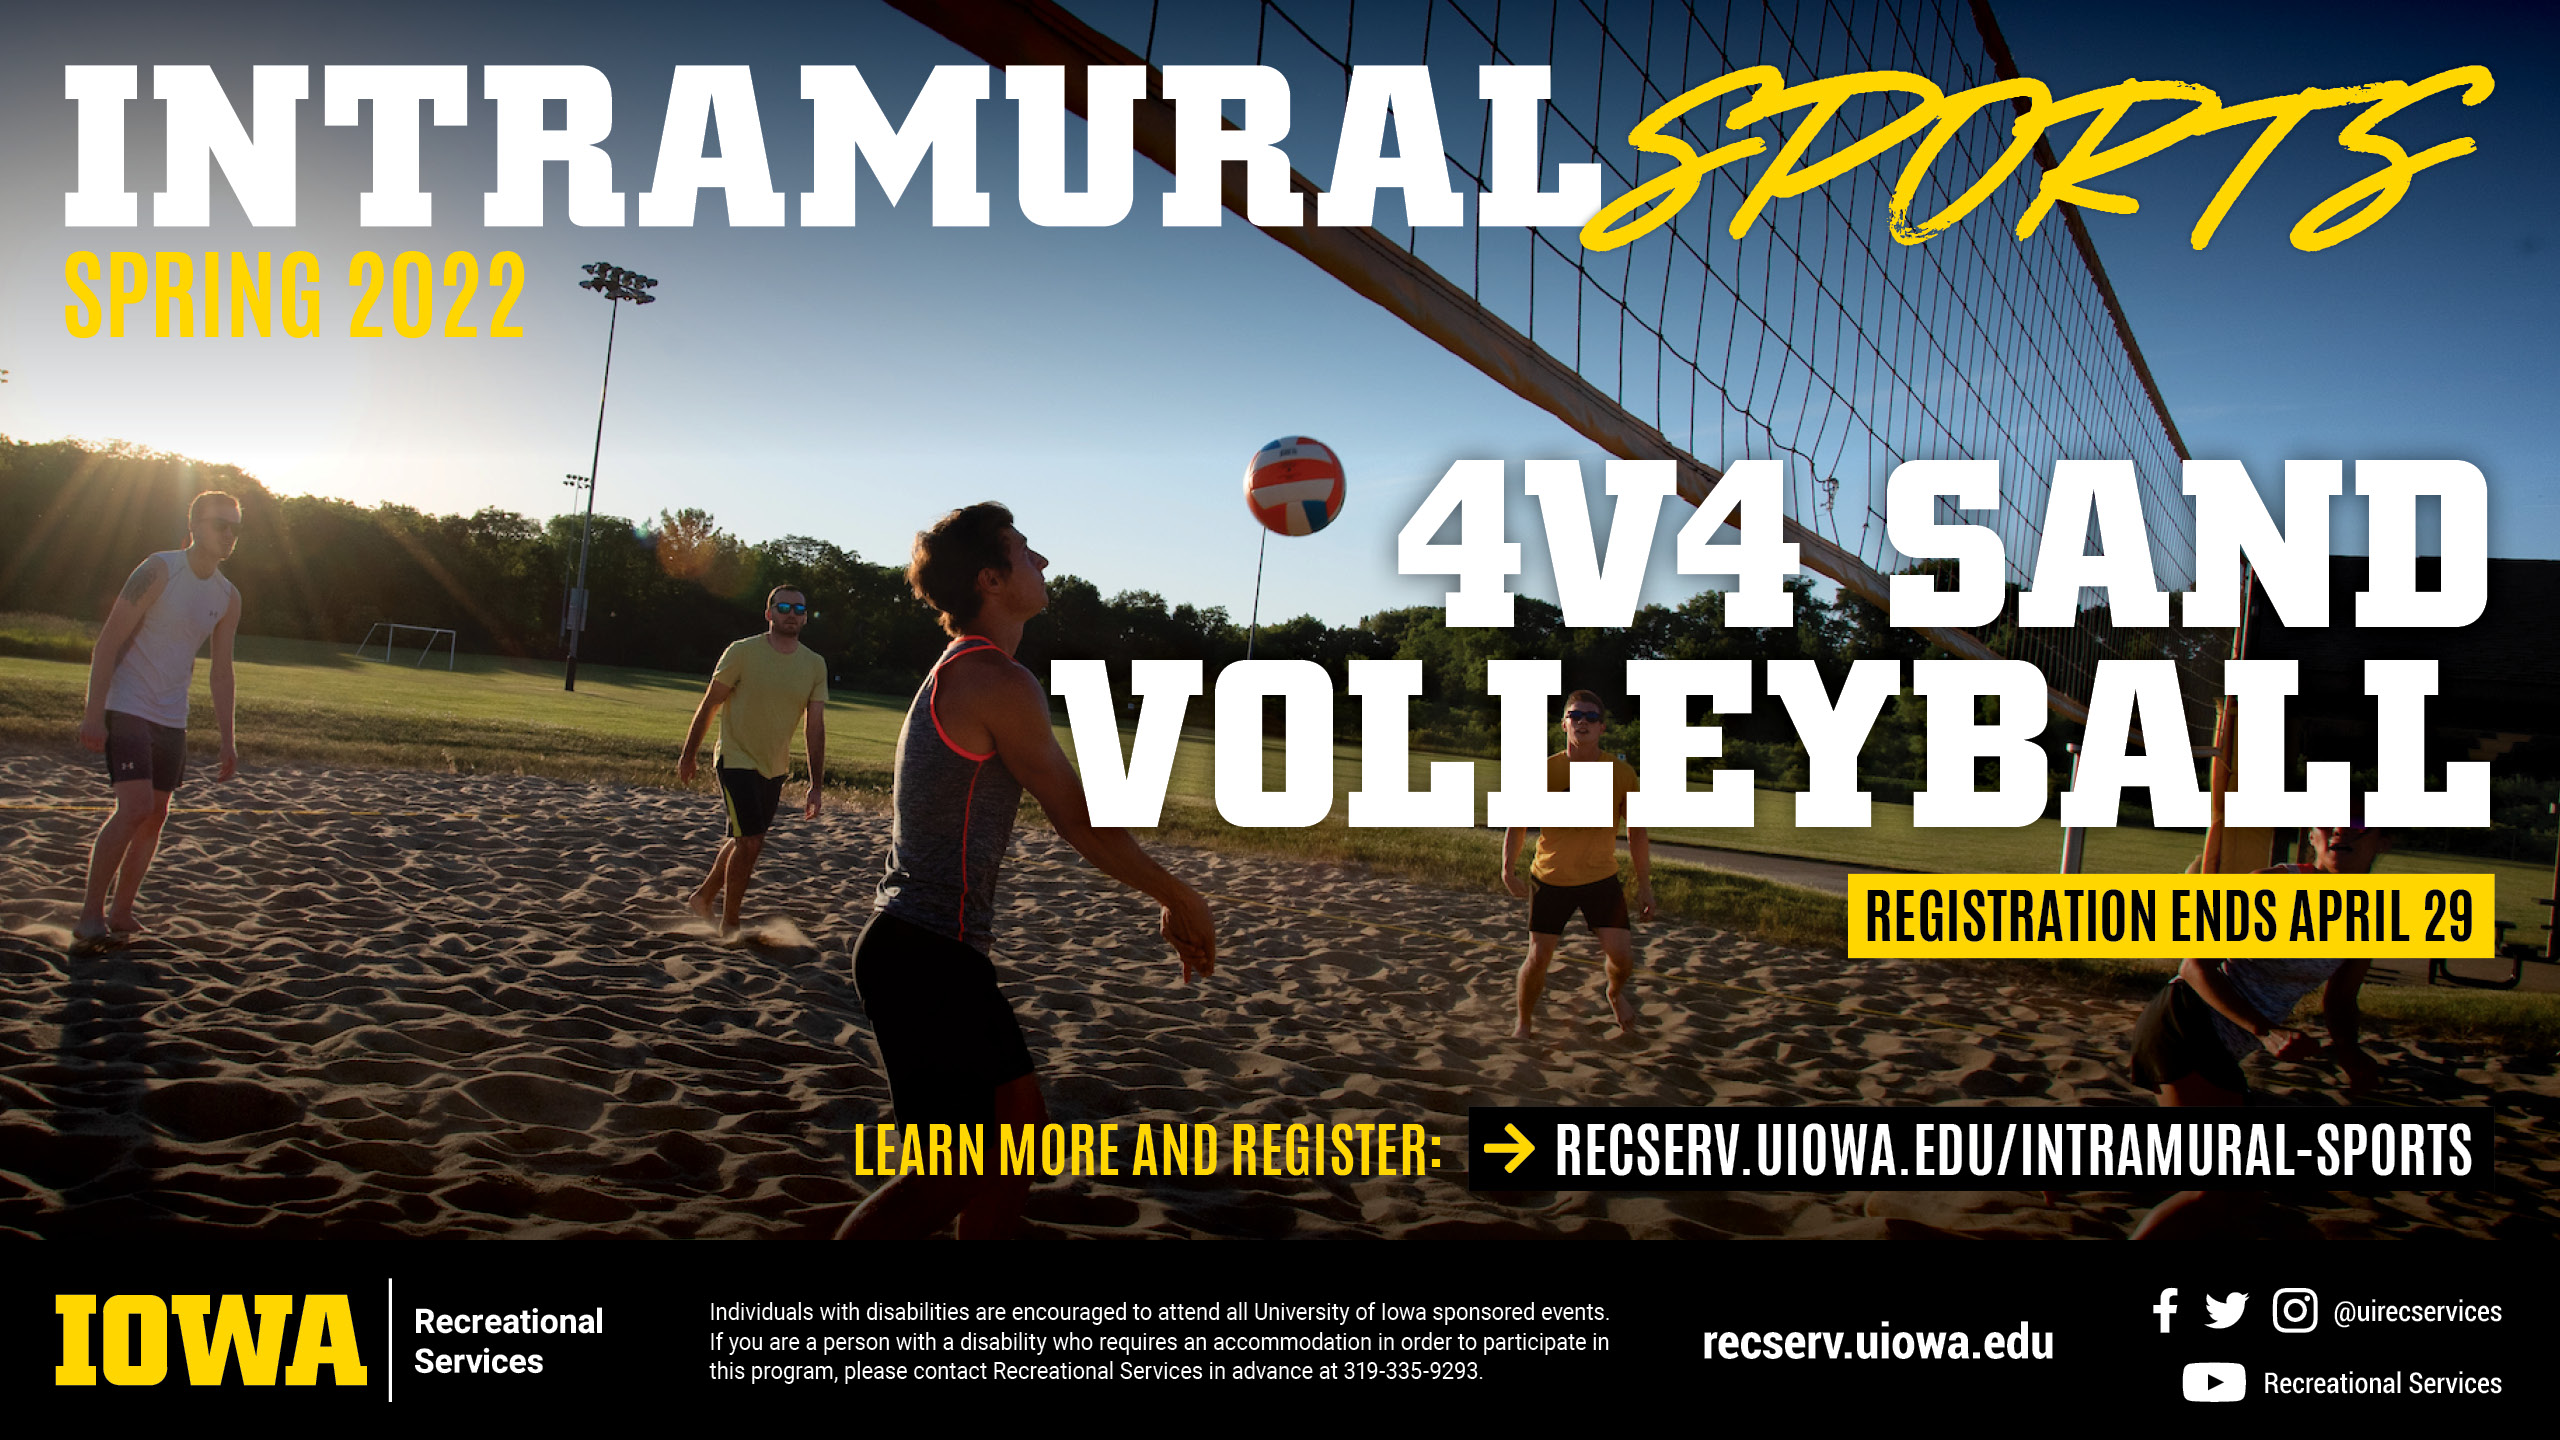 Intramural Sports Spring 2022 4v4 Sand Volleyball Registration ends April 29 learn more and register at: recserv.uiowa.edu/intramural-sports